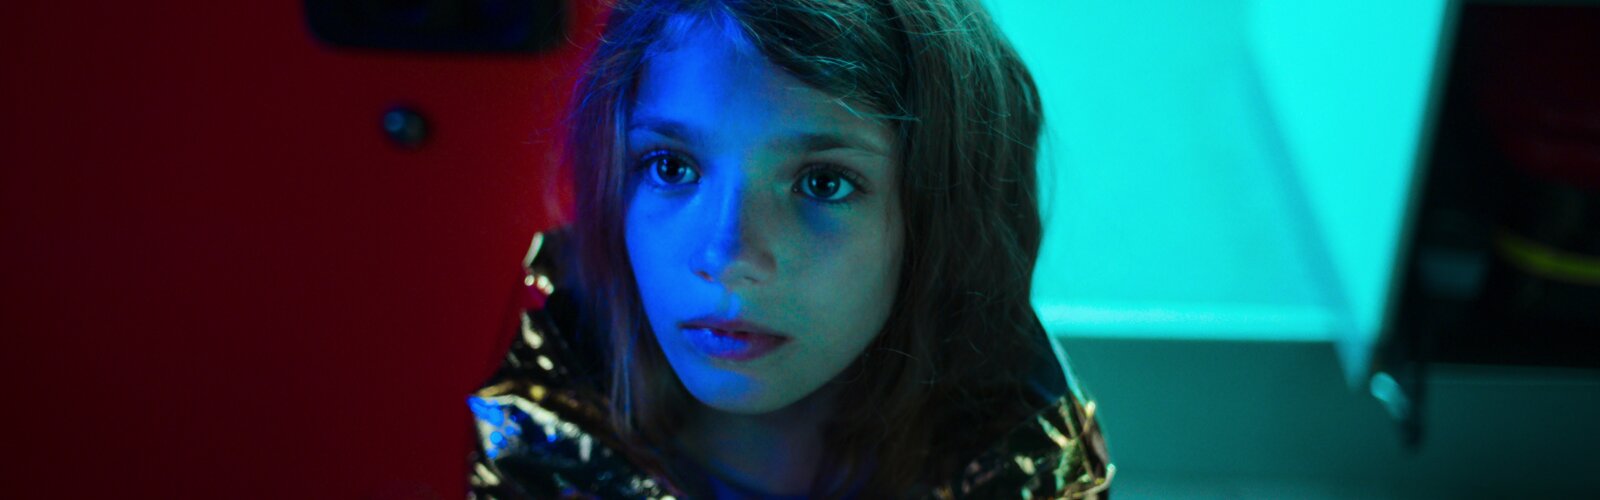 Naila Schuberth spielt Hannah in der Netflix-Serie Liebes Kind.